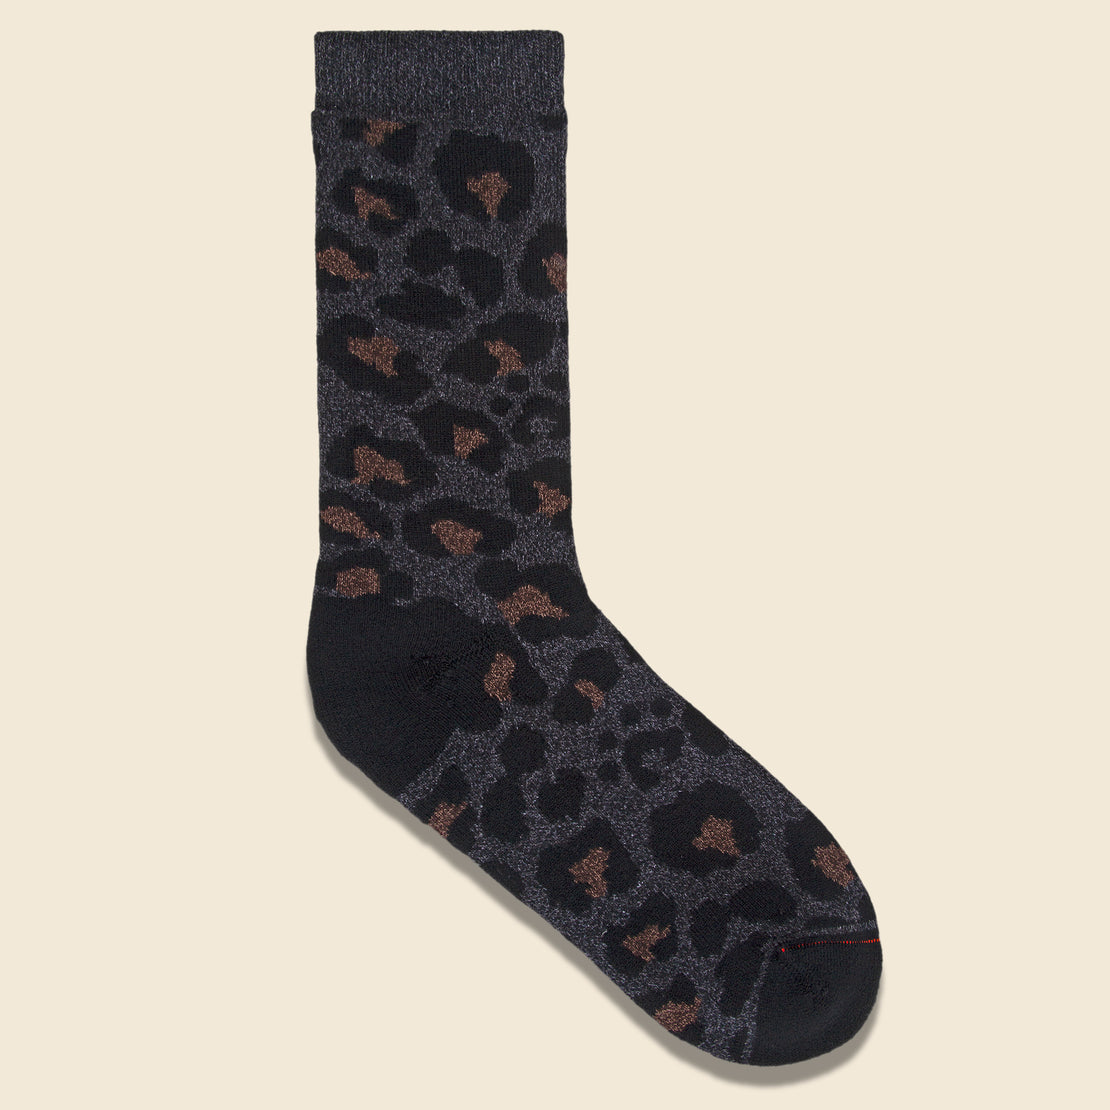 RoToTo Pile Leopard Socks - Charcoal